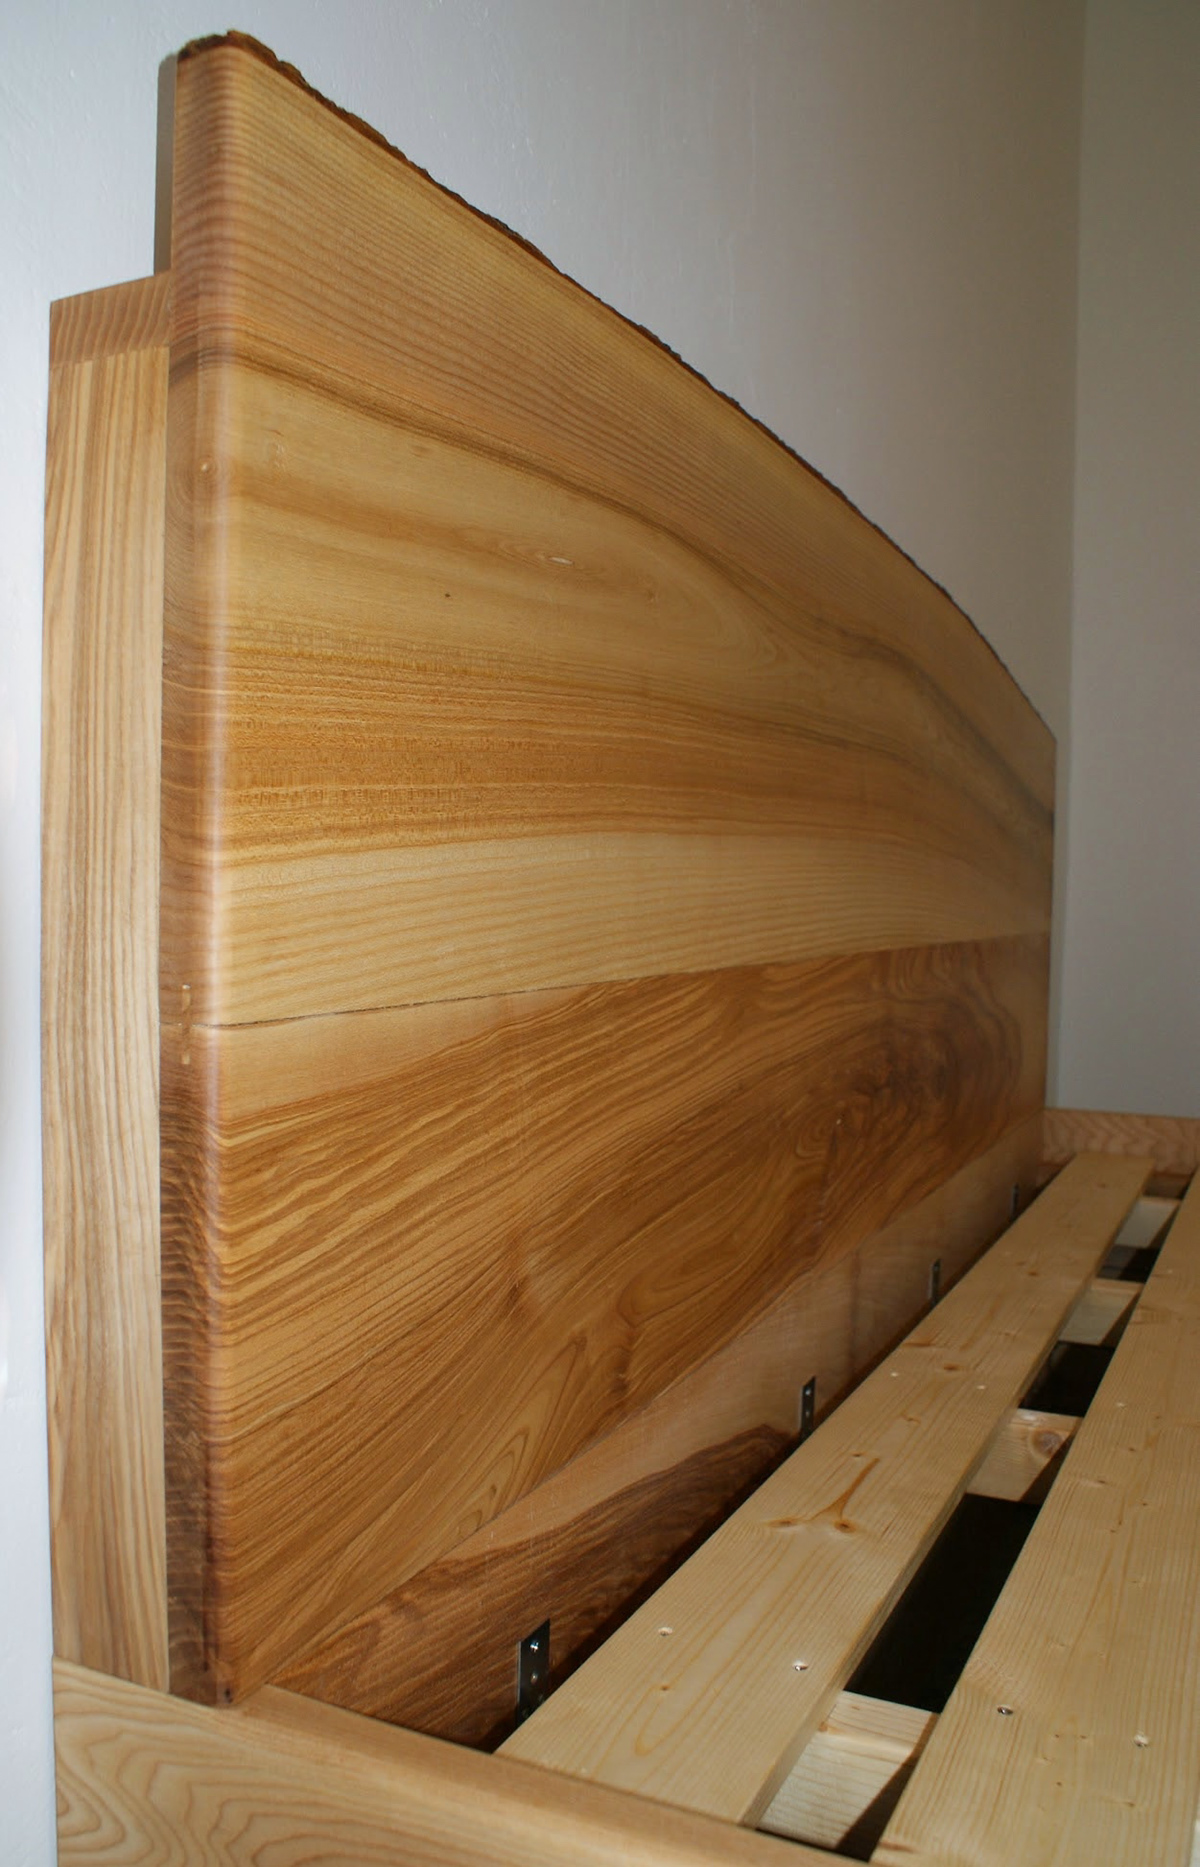 Ash wood bed